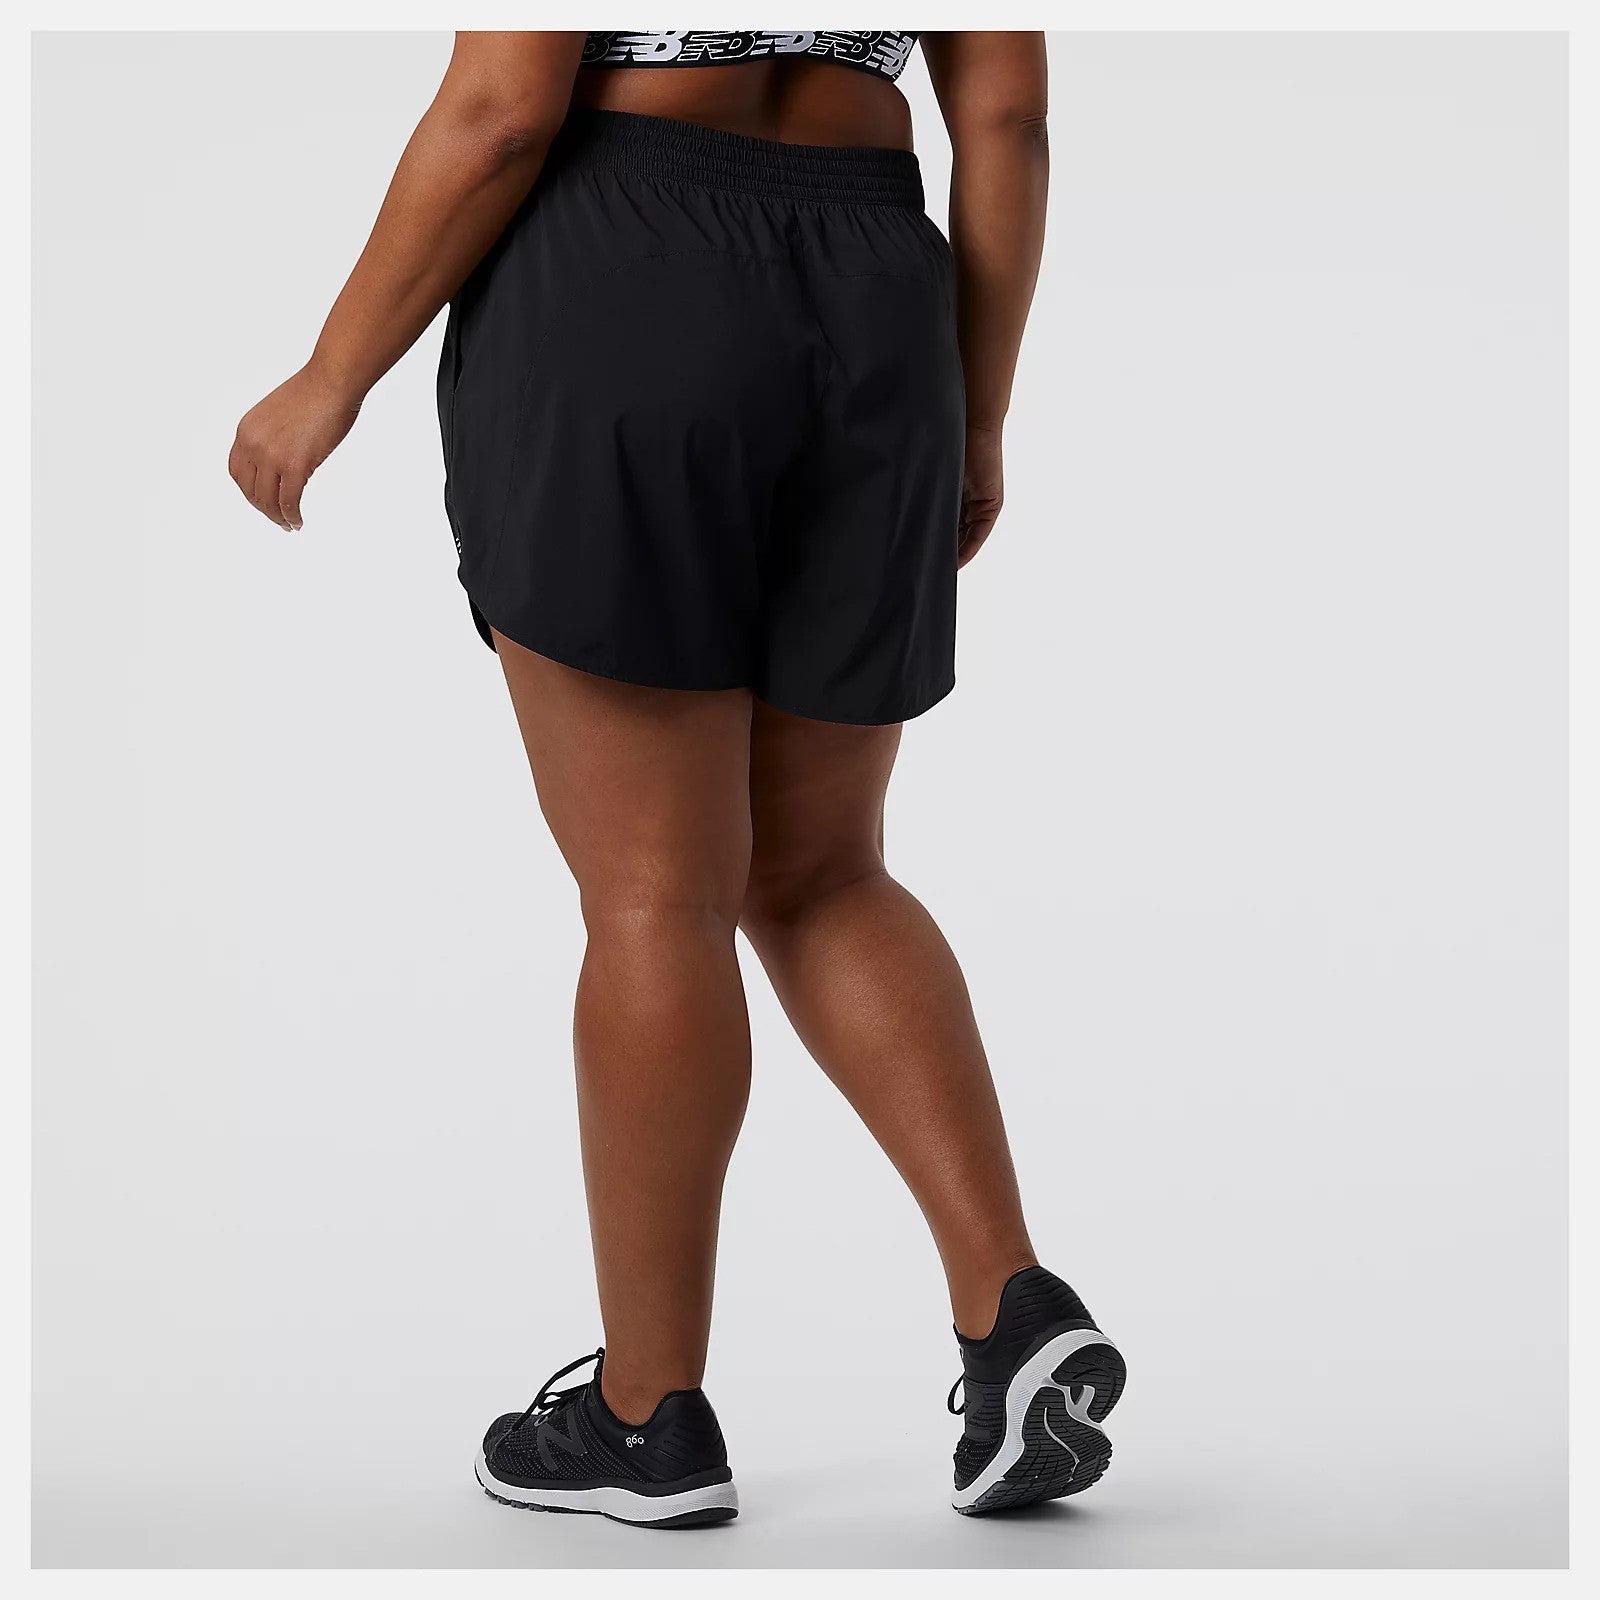 New Balance Women's Plus Size Accelerate 5 inch Short Black